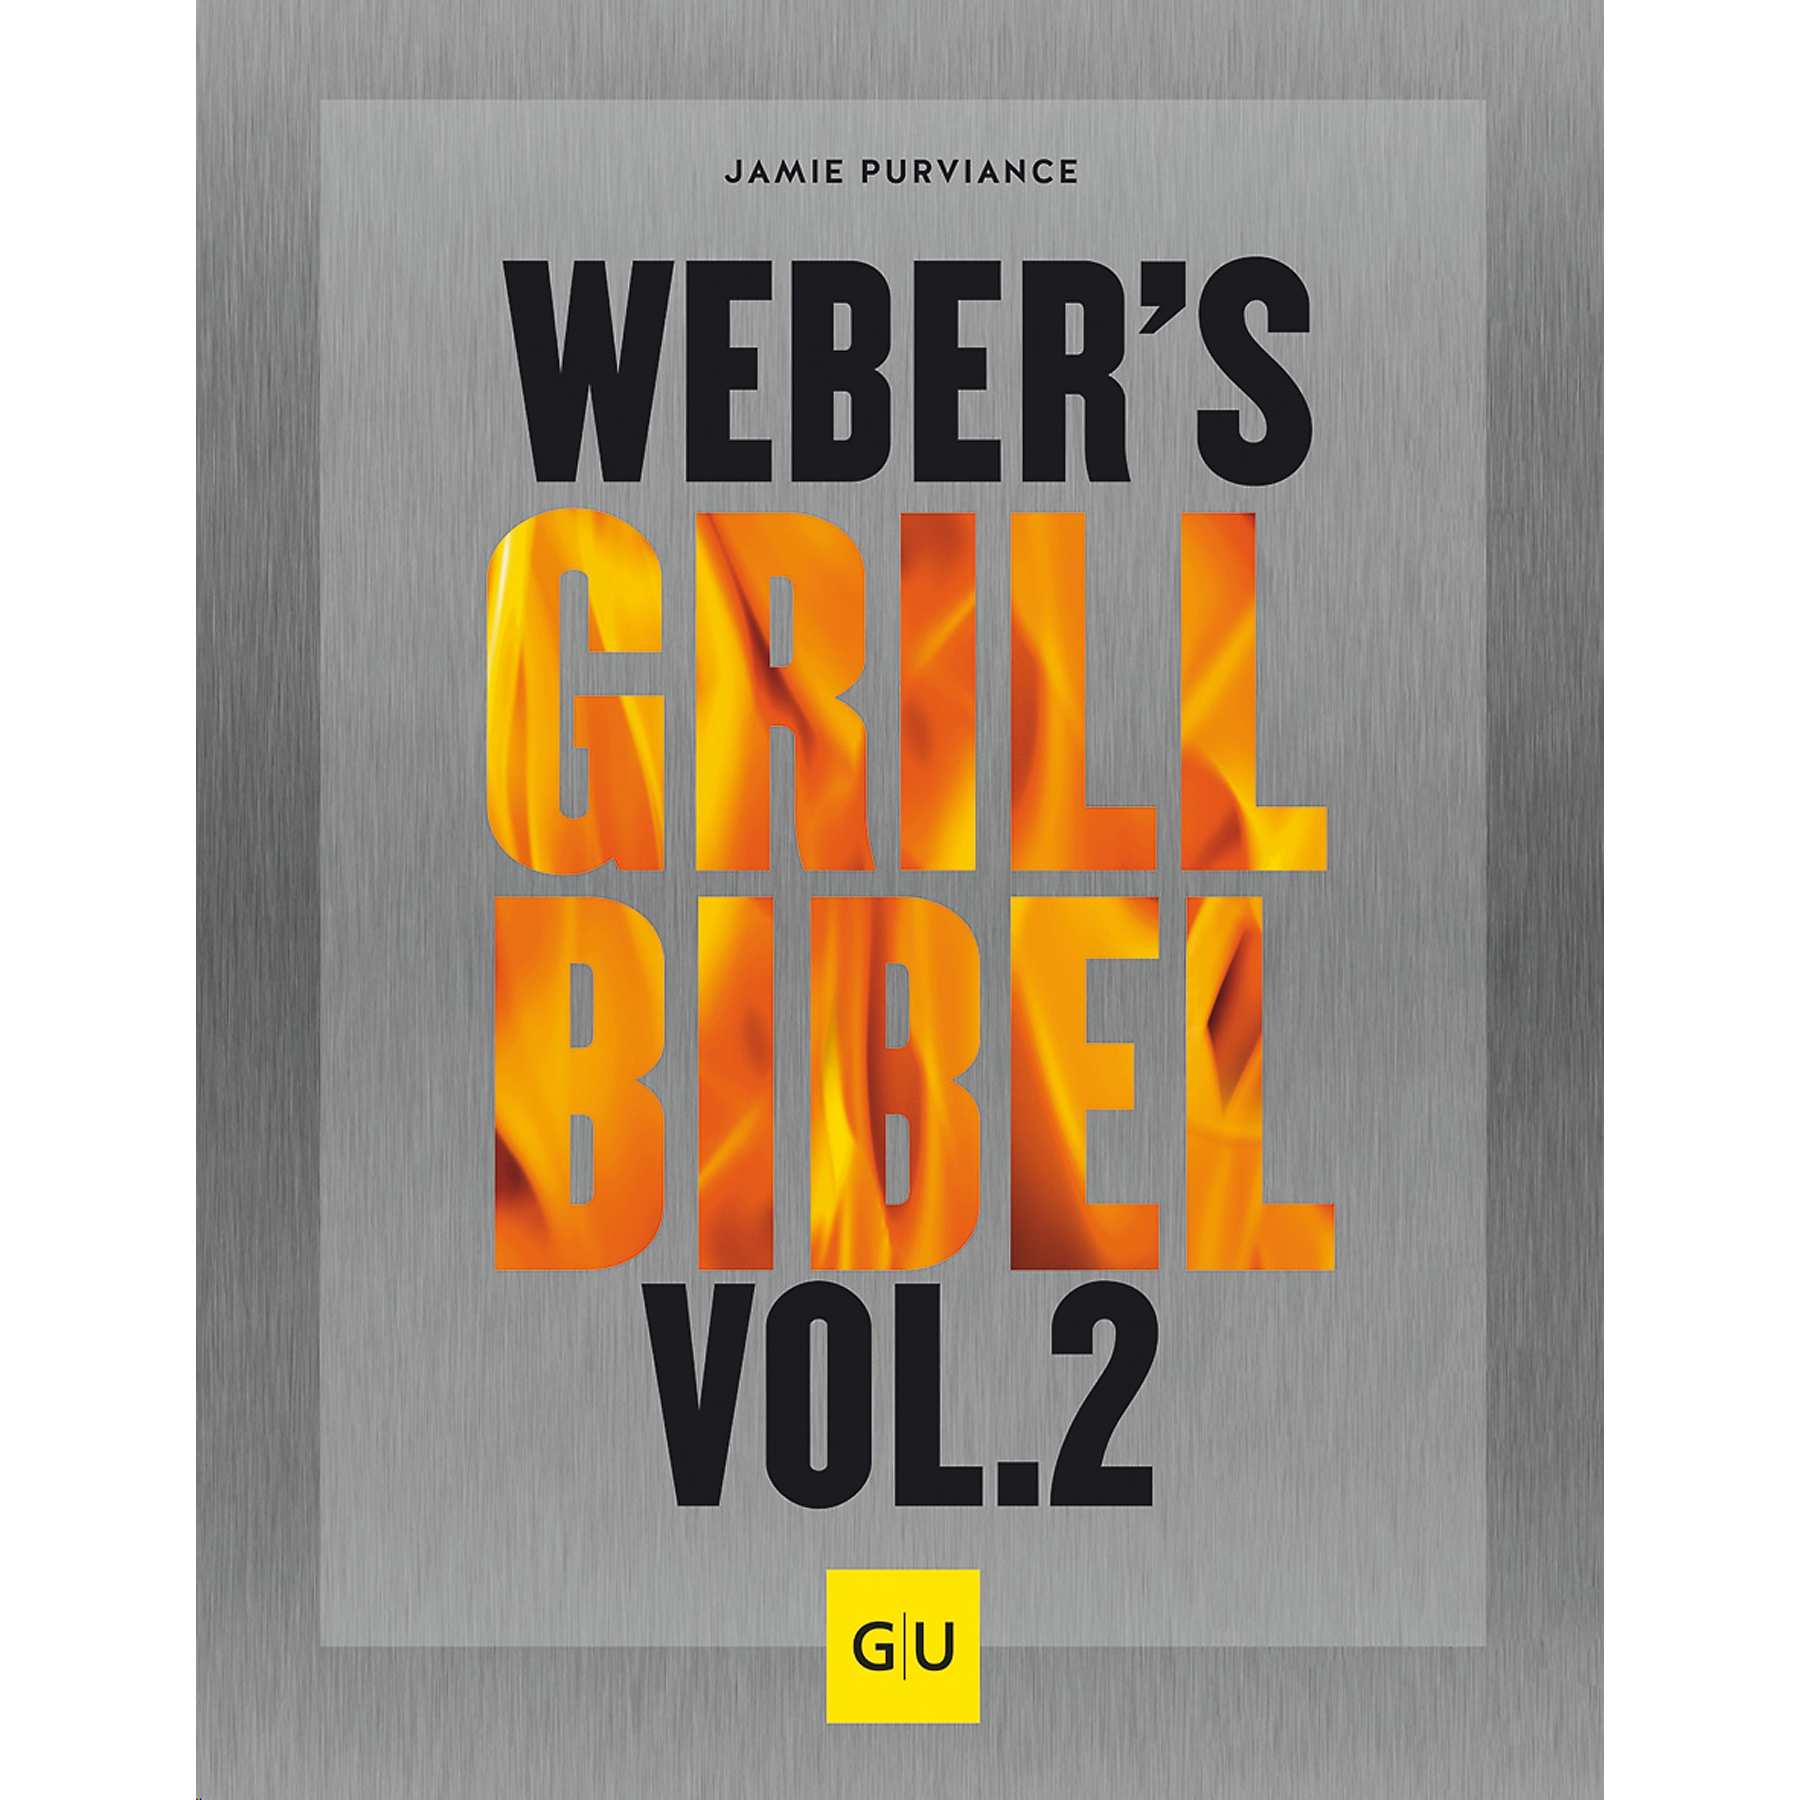 Weber’s Grillbibel Vol. 2